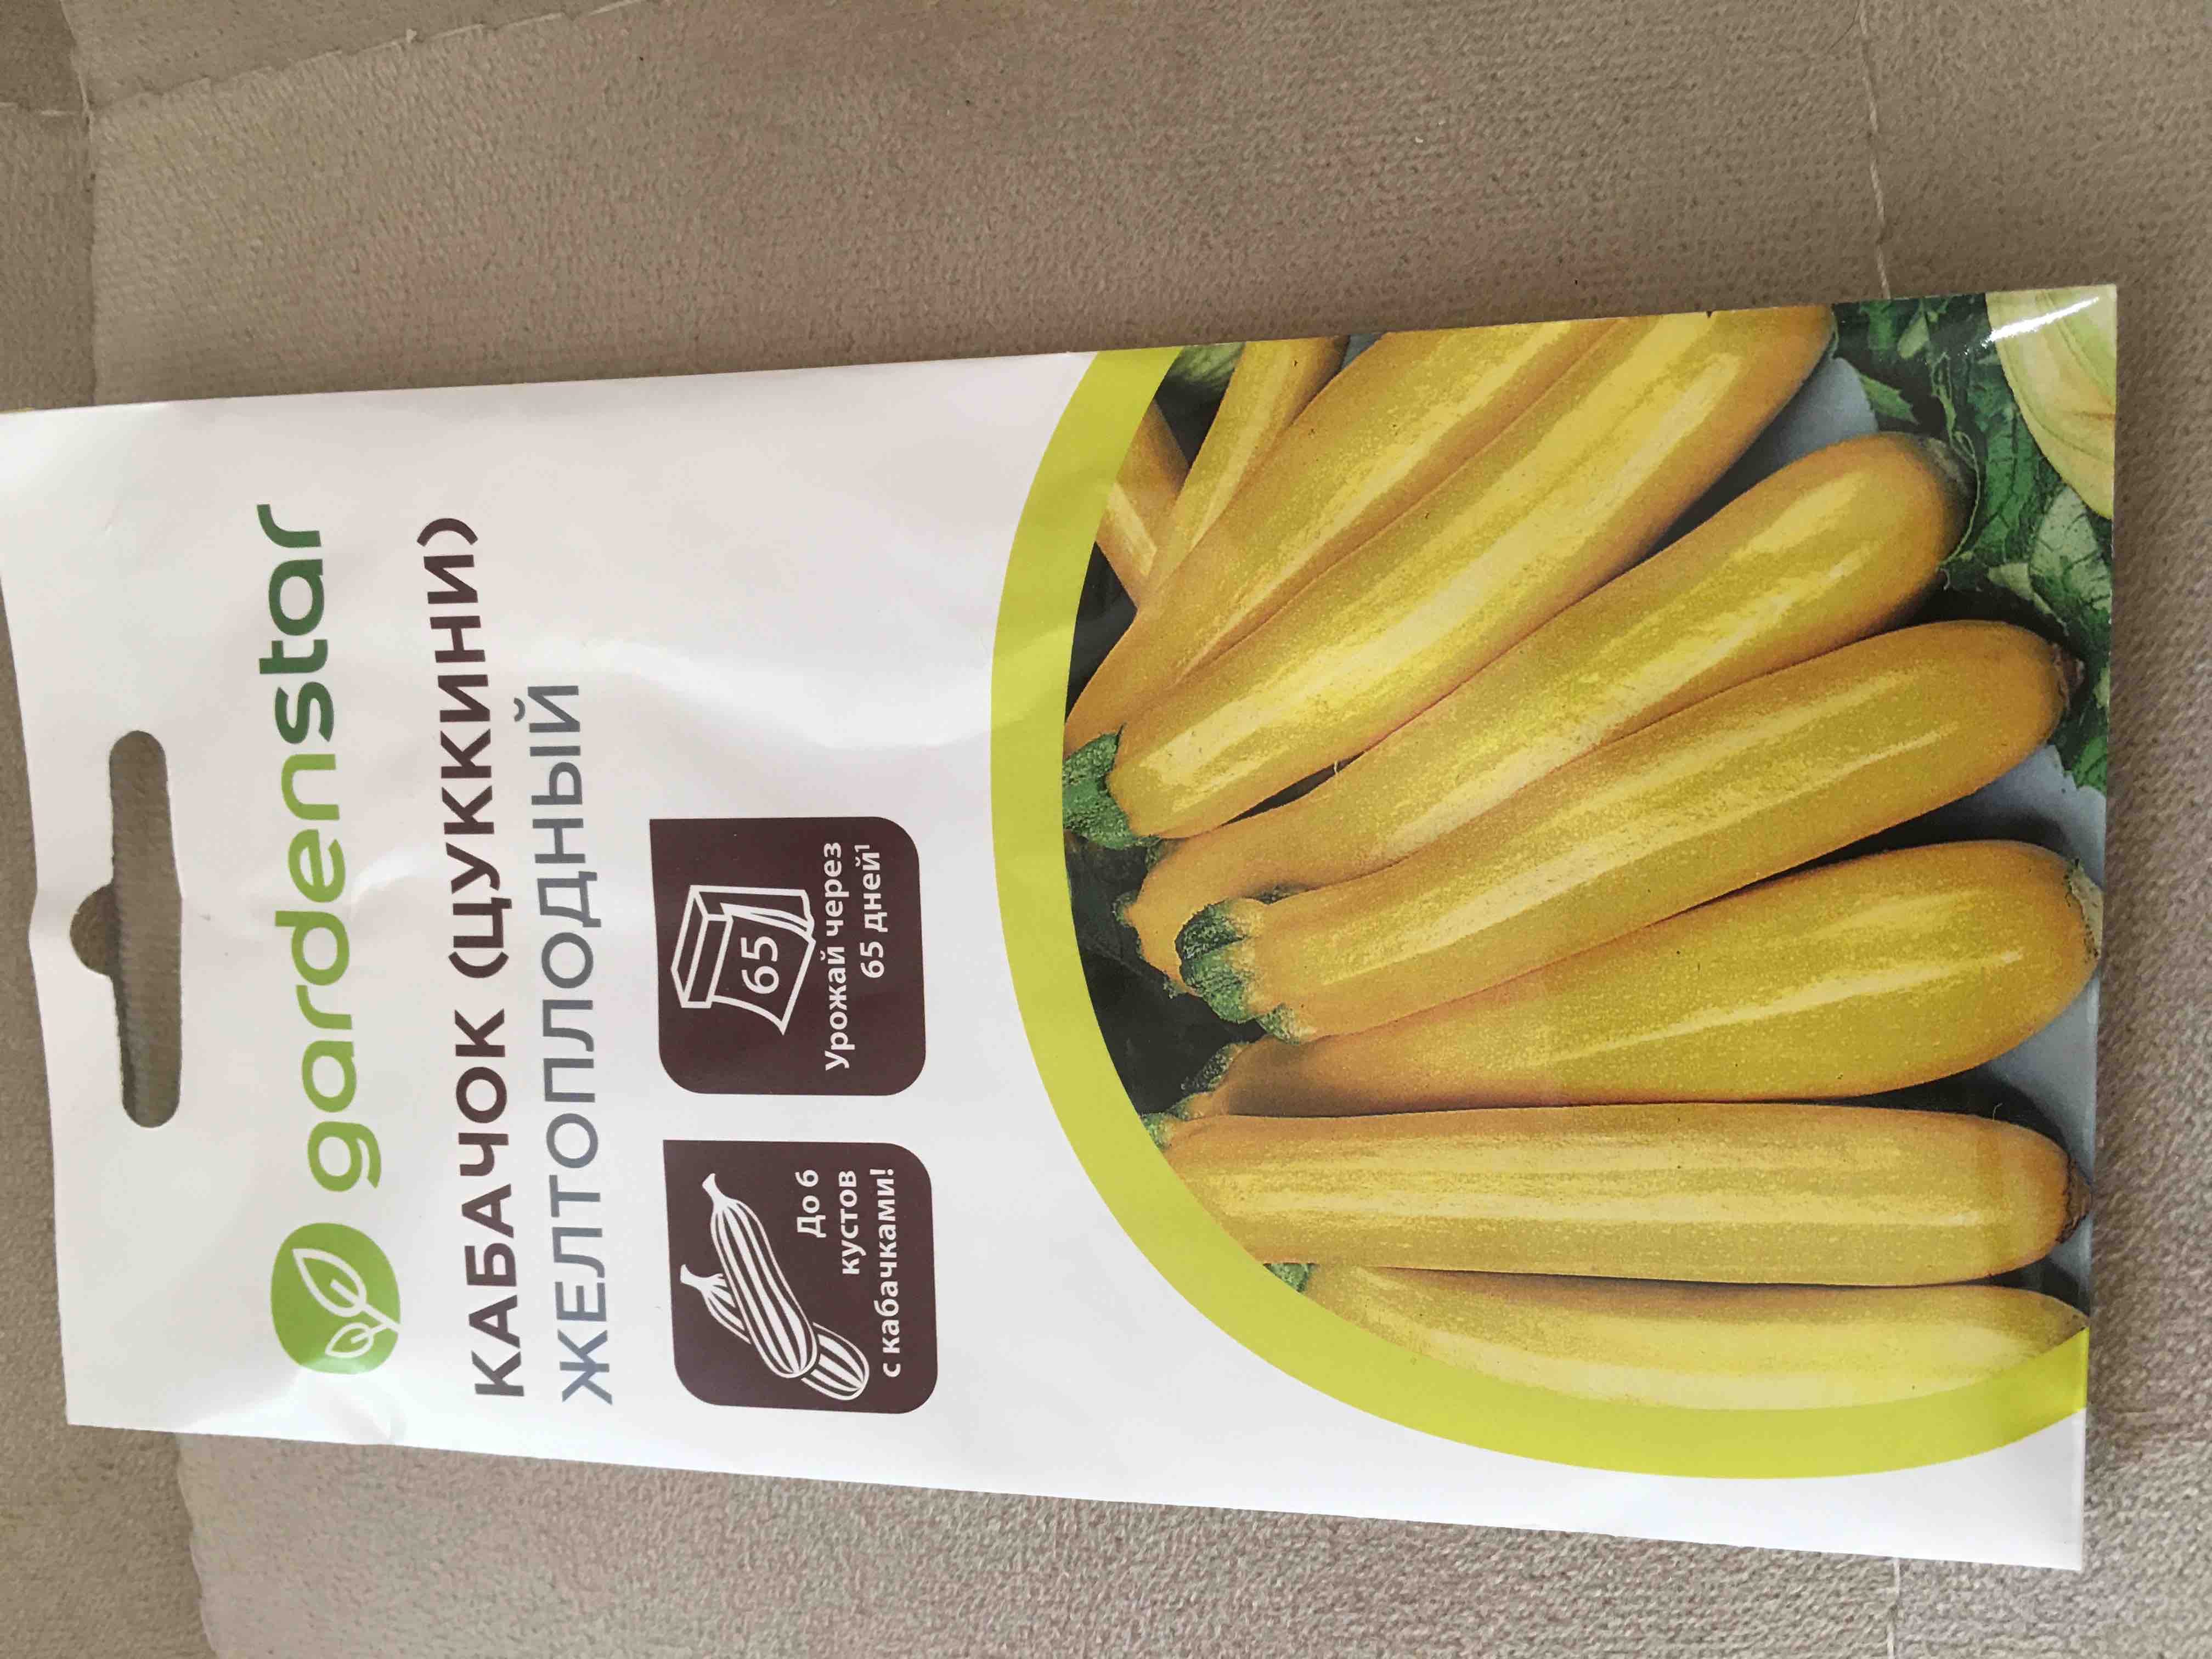 Семена кабачок Garden Star Желтоплодный цуккини 1 уп. - отзывы покупателейна Мегамаркет